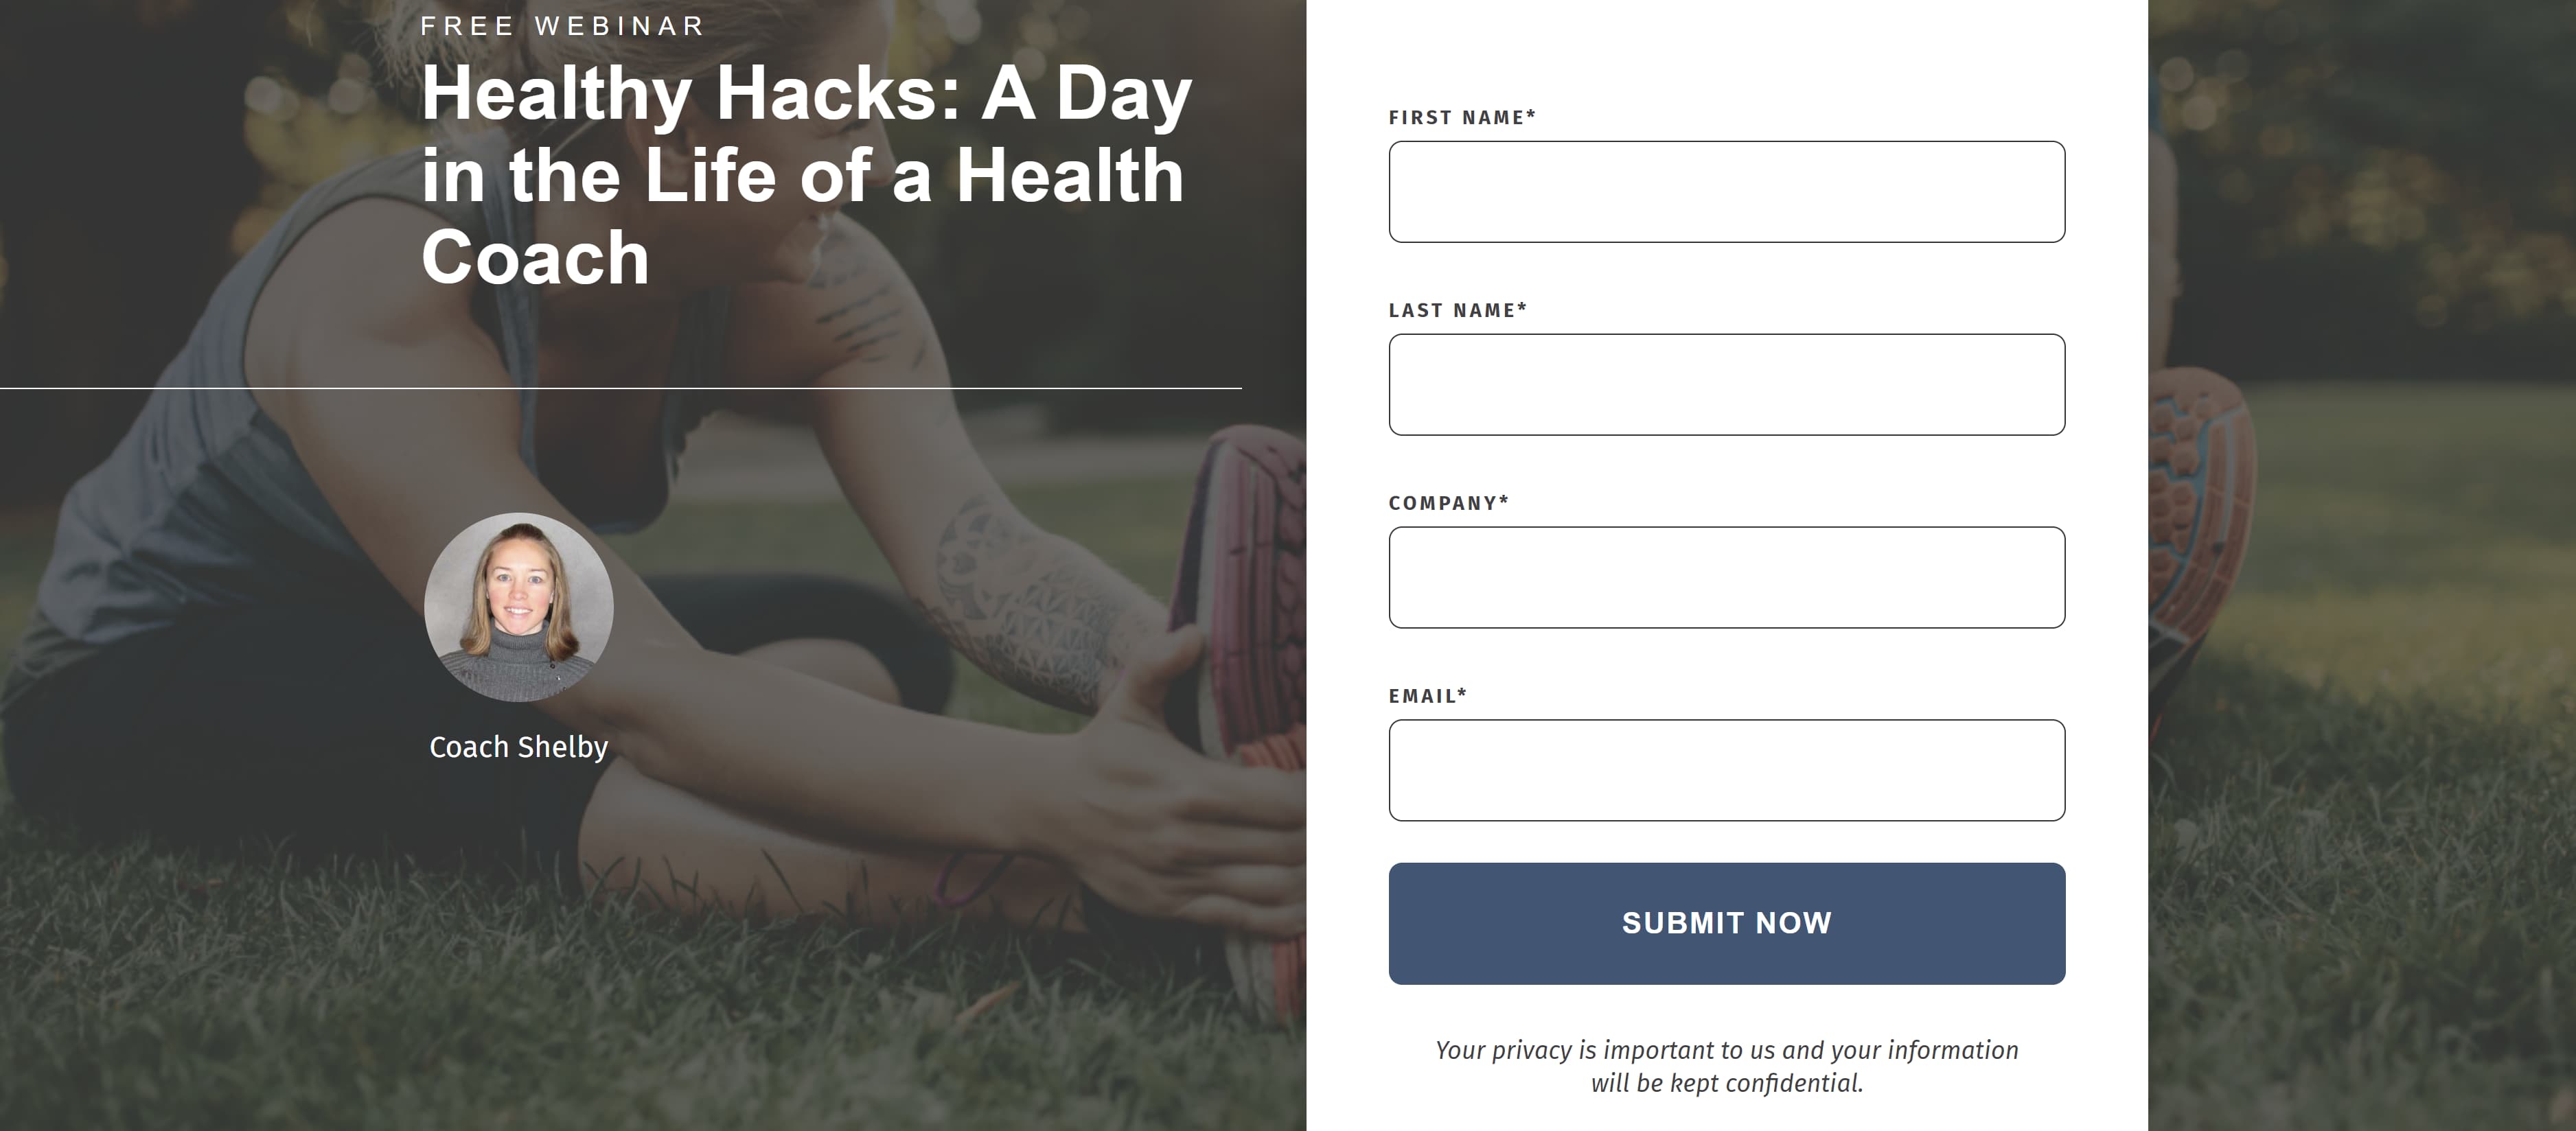 Contoh halaman arahan webinar dari HealthCheck360